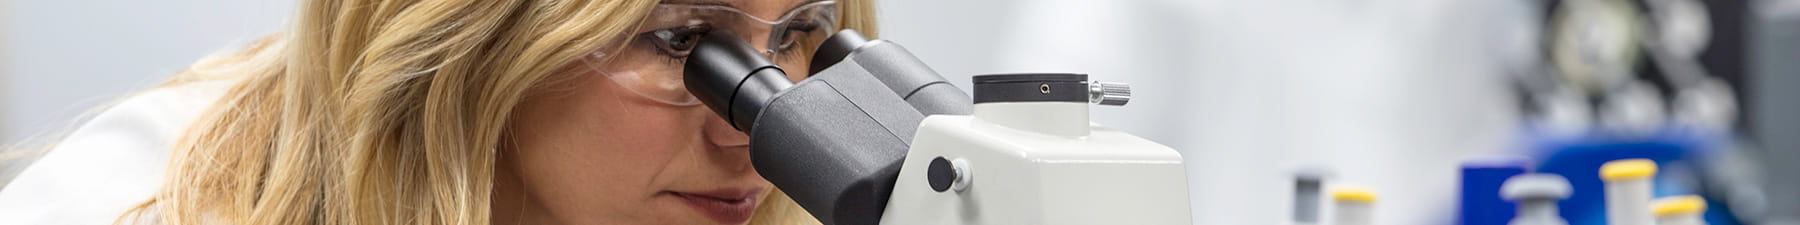 Woman-looking-into-microscope